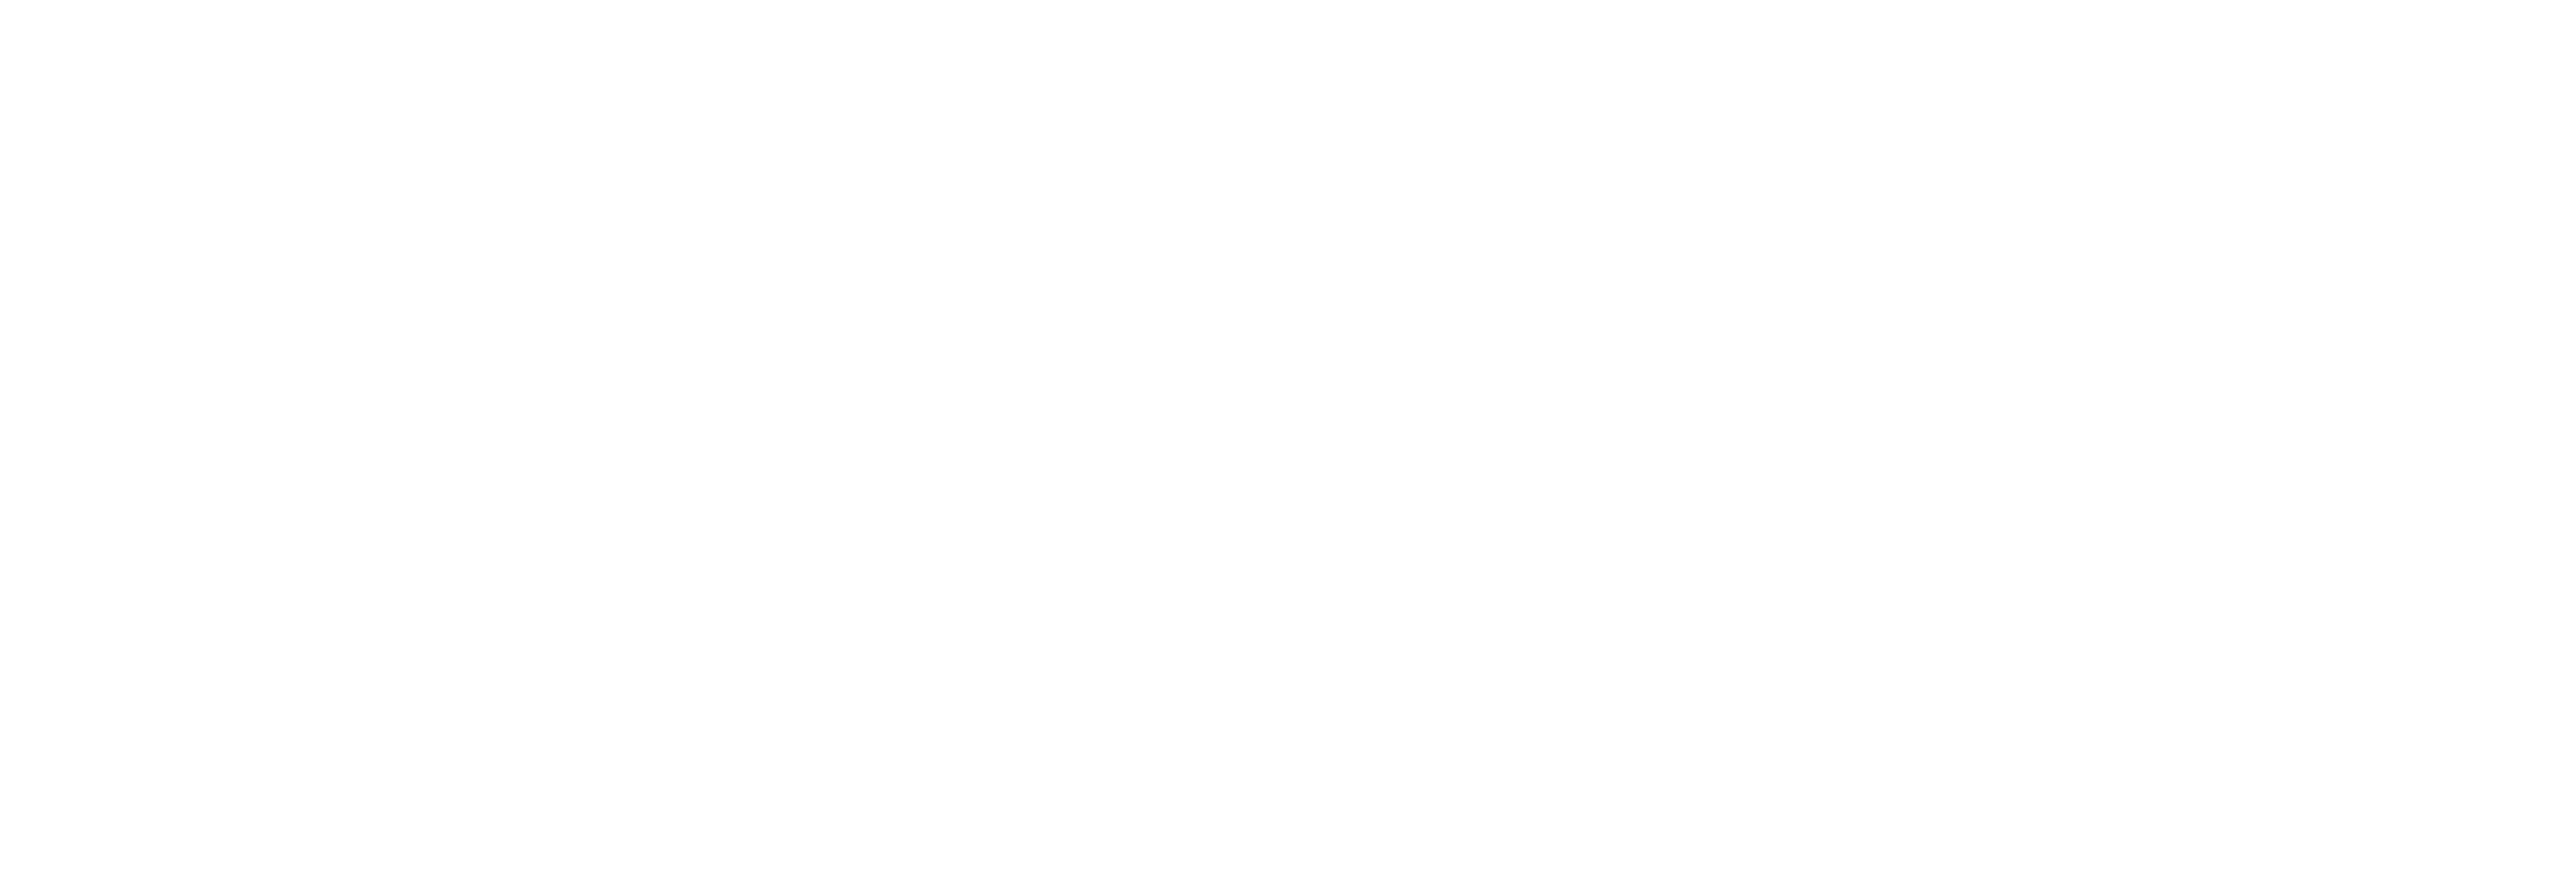 AniCura Hoogvliet logo